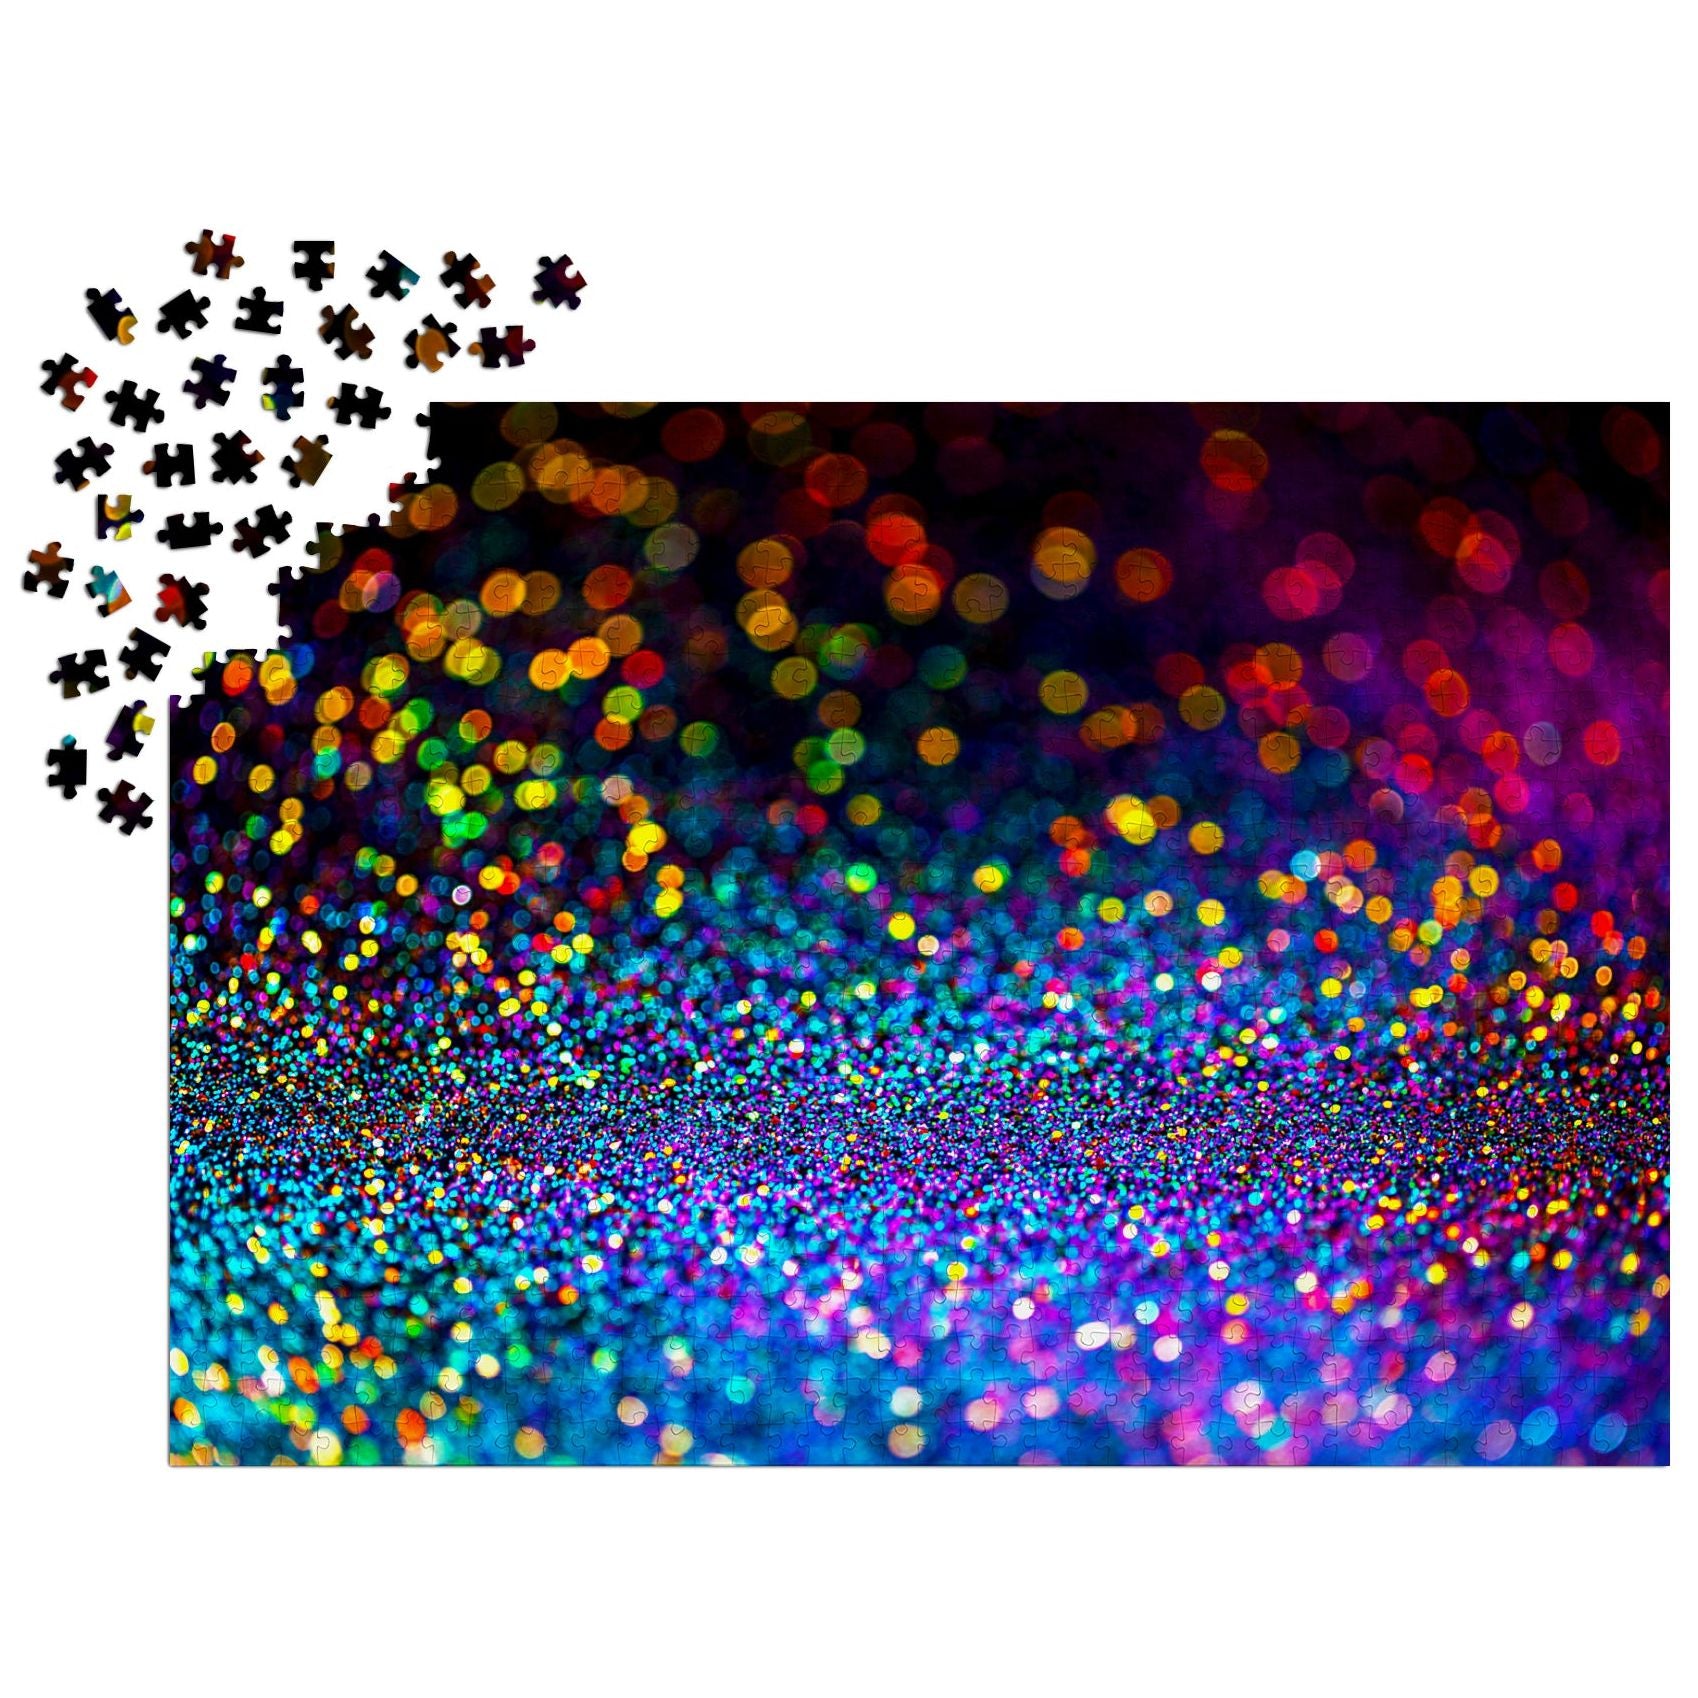 ENJOY Puzzle | 1000 Teile | Multicolor Glitter